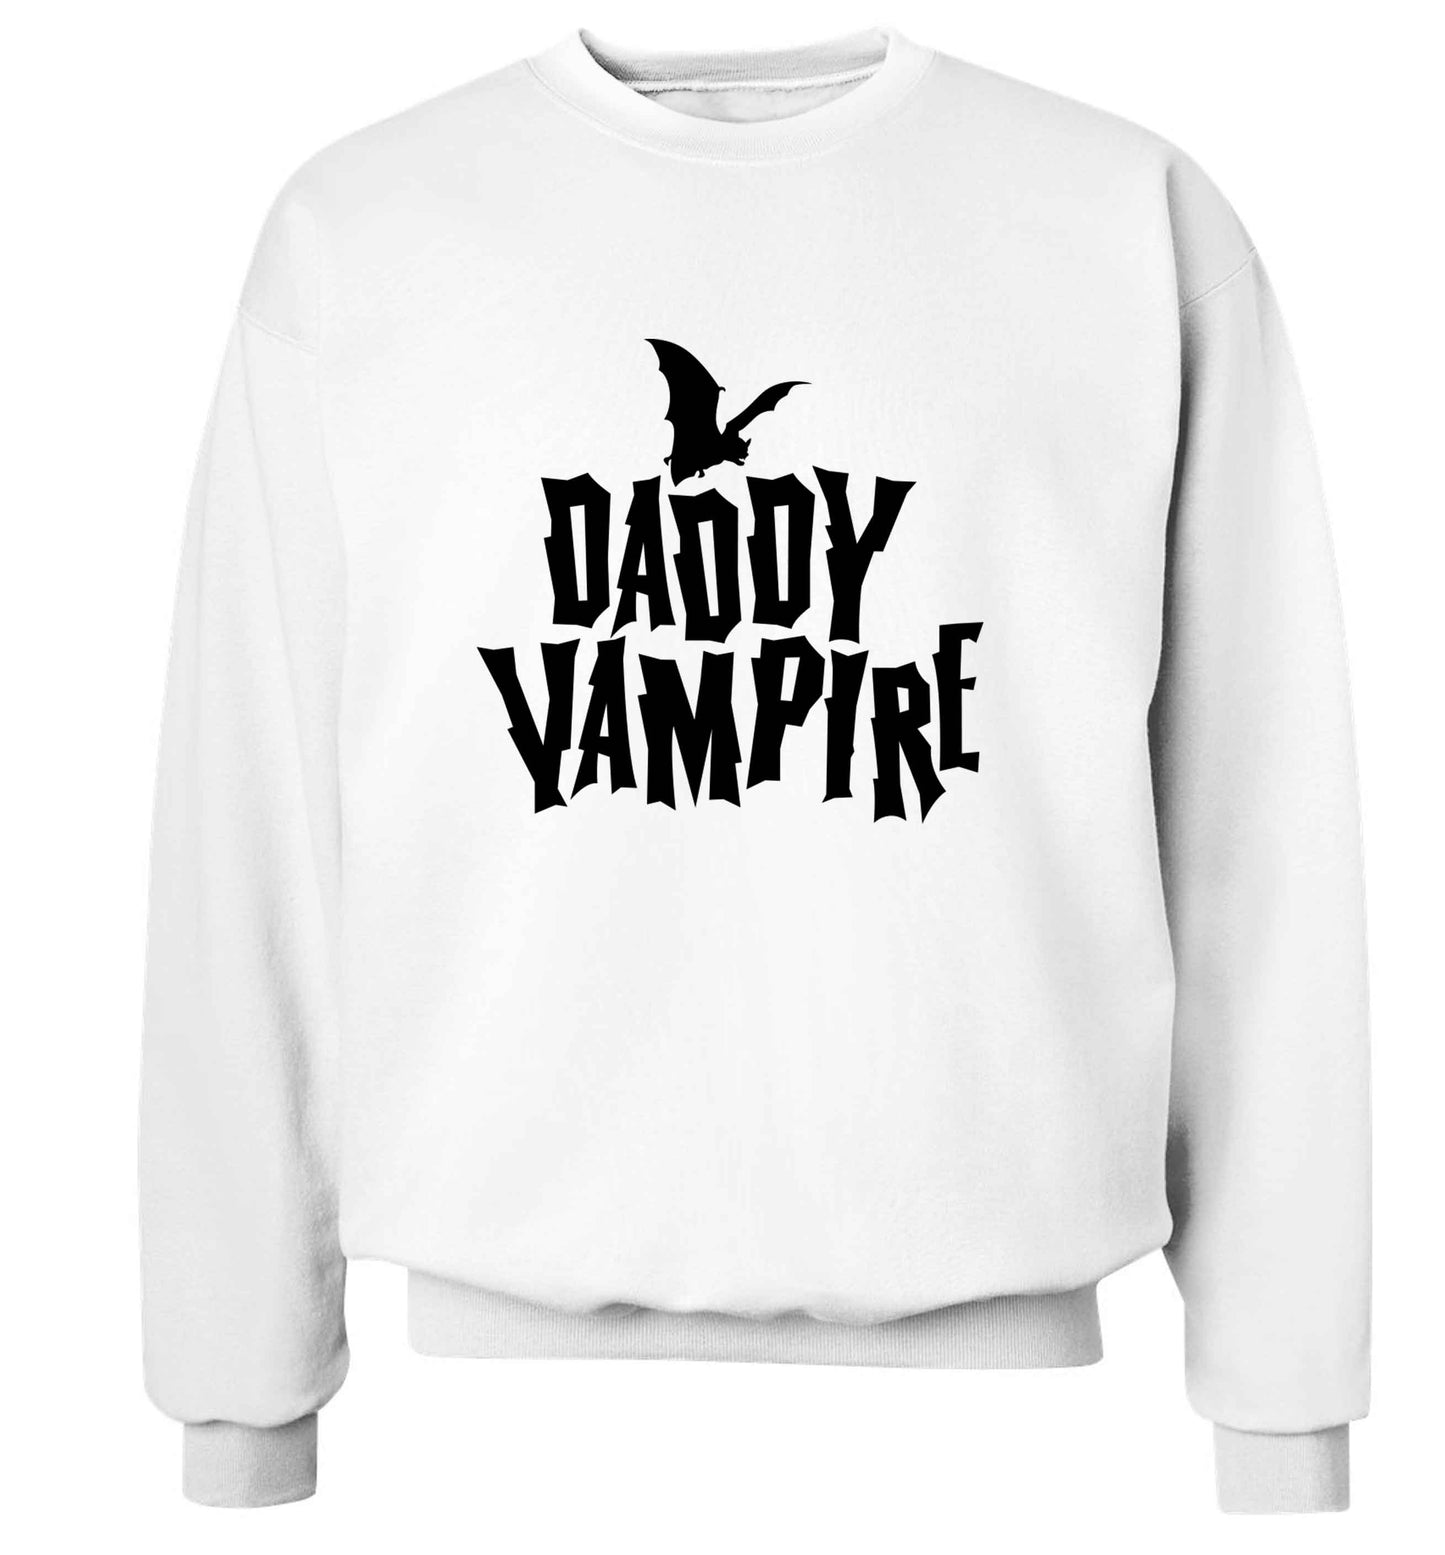 Daddy vampire adult's unisex white sweater 2XL